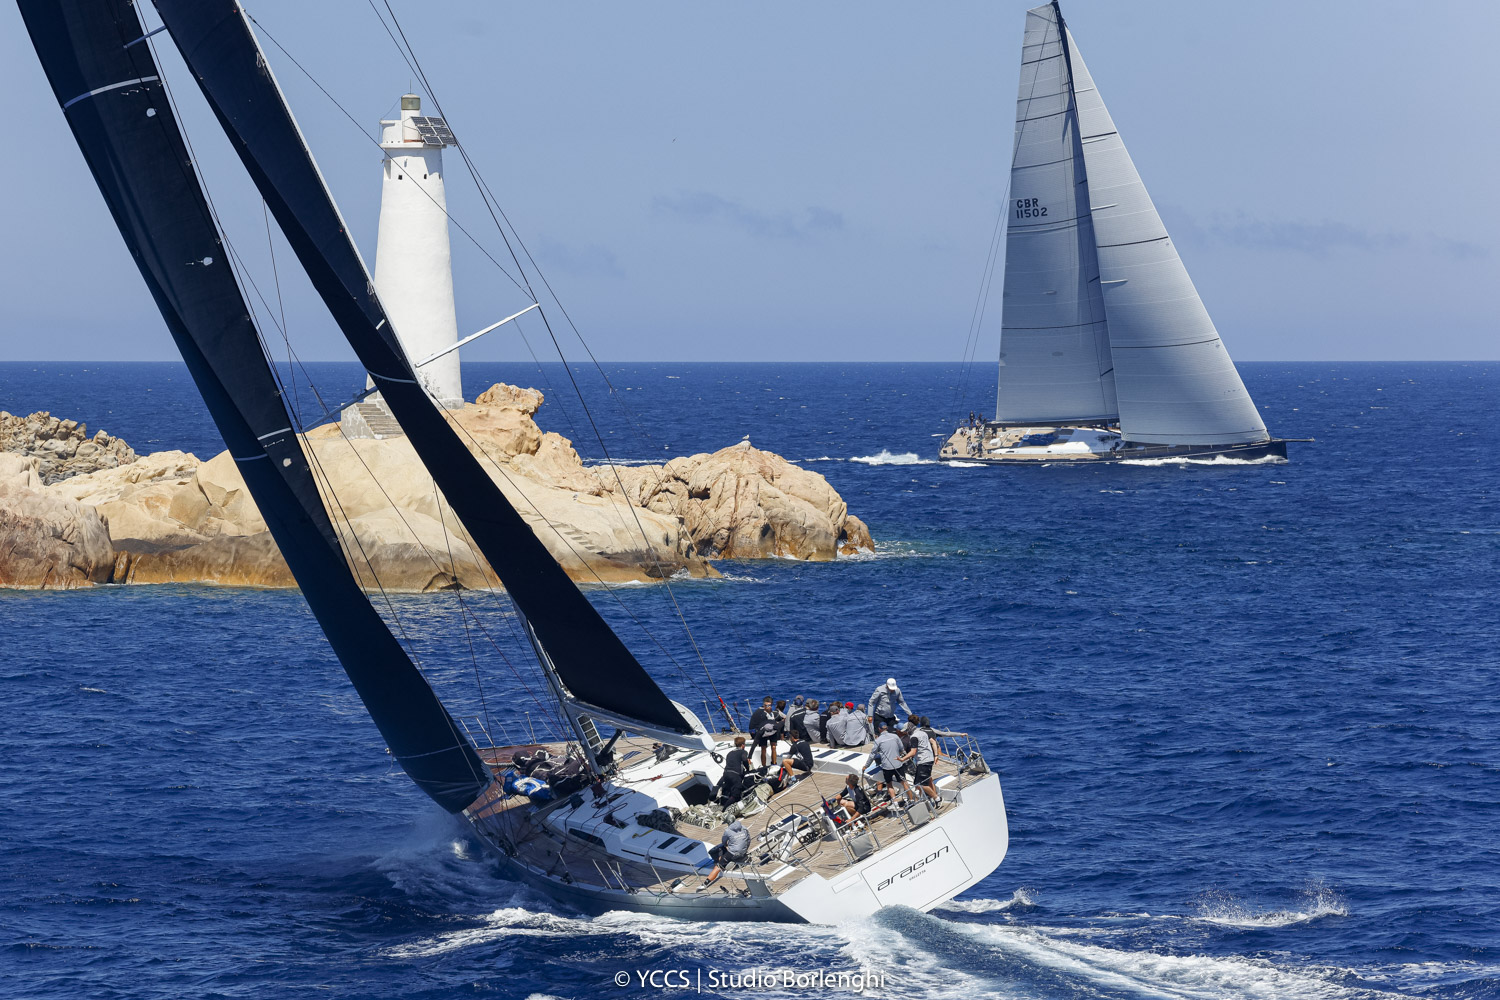 Giorgio Armani new title sponsor of YCCS Superyacht Regatta - NEWS - Yacht Club Costa Smeralda